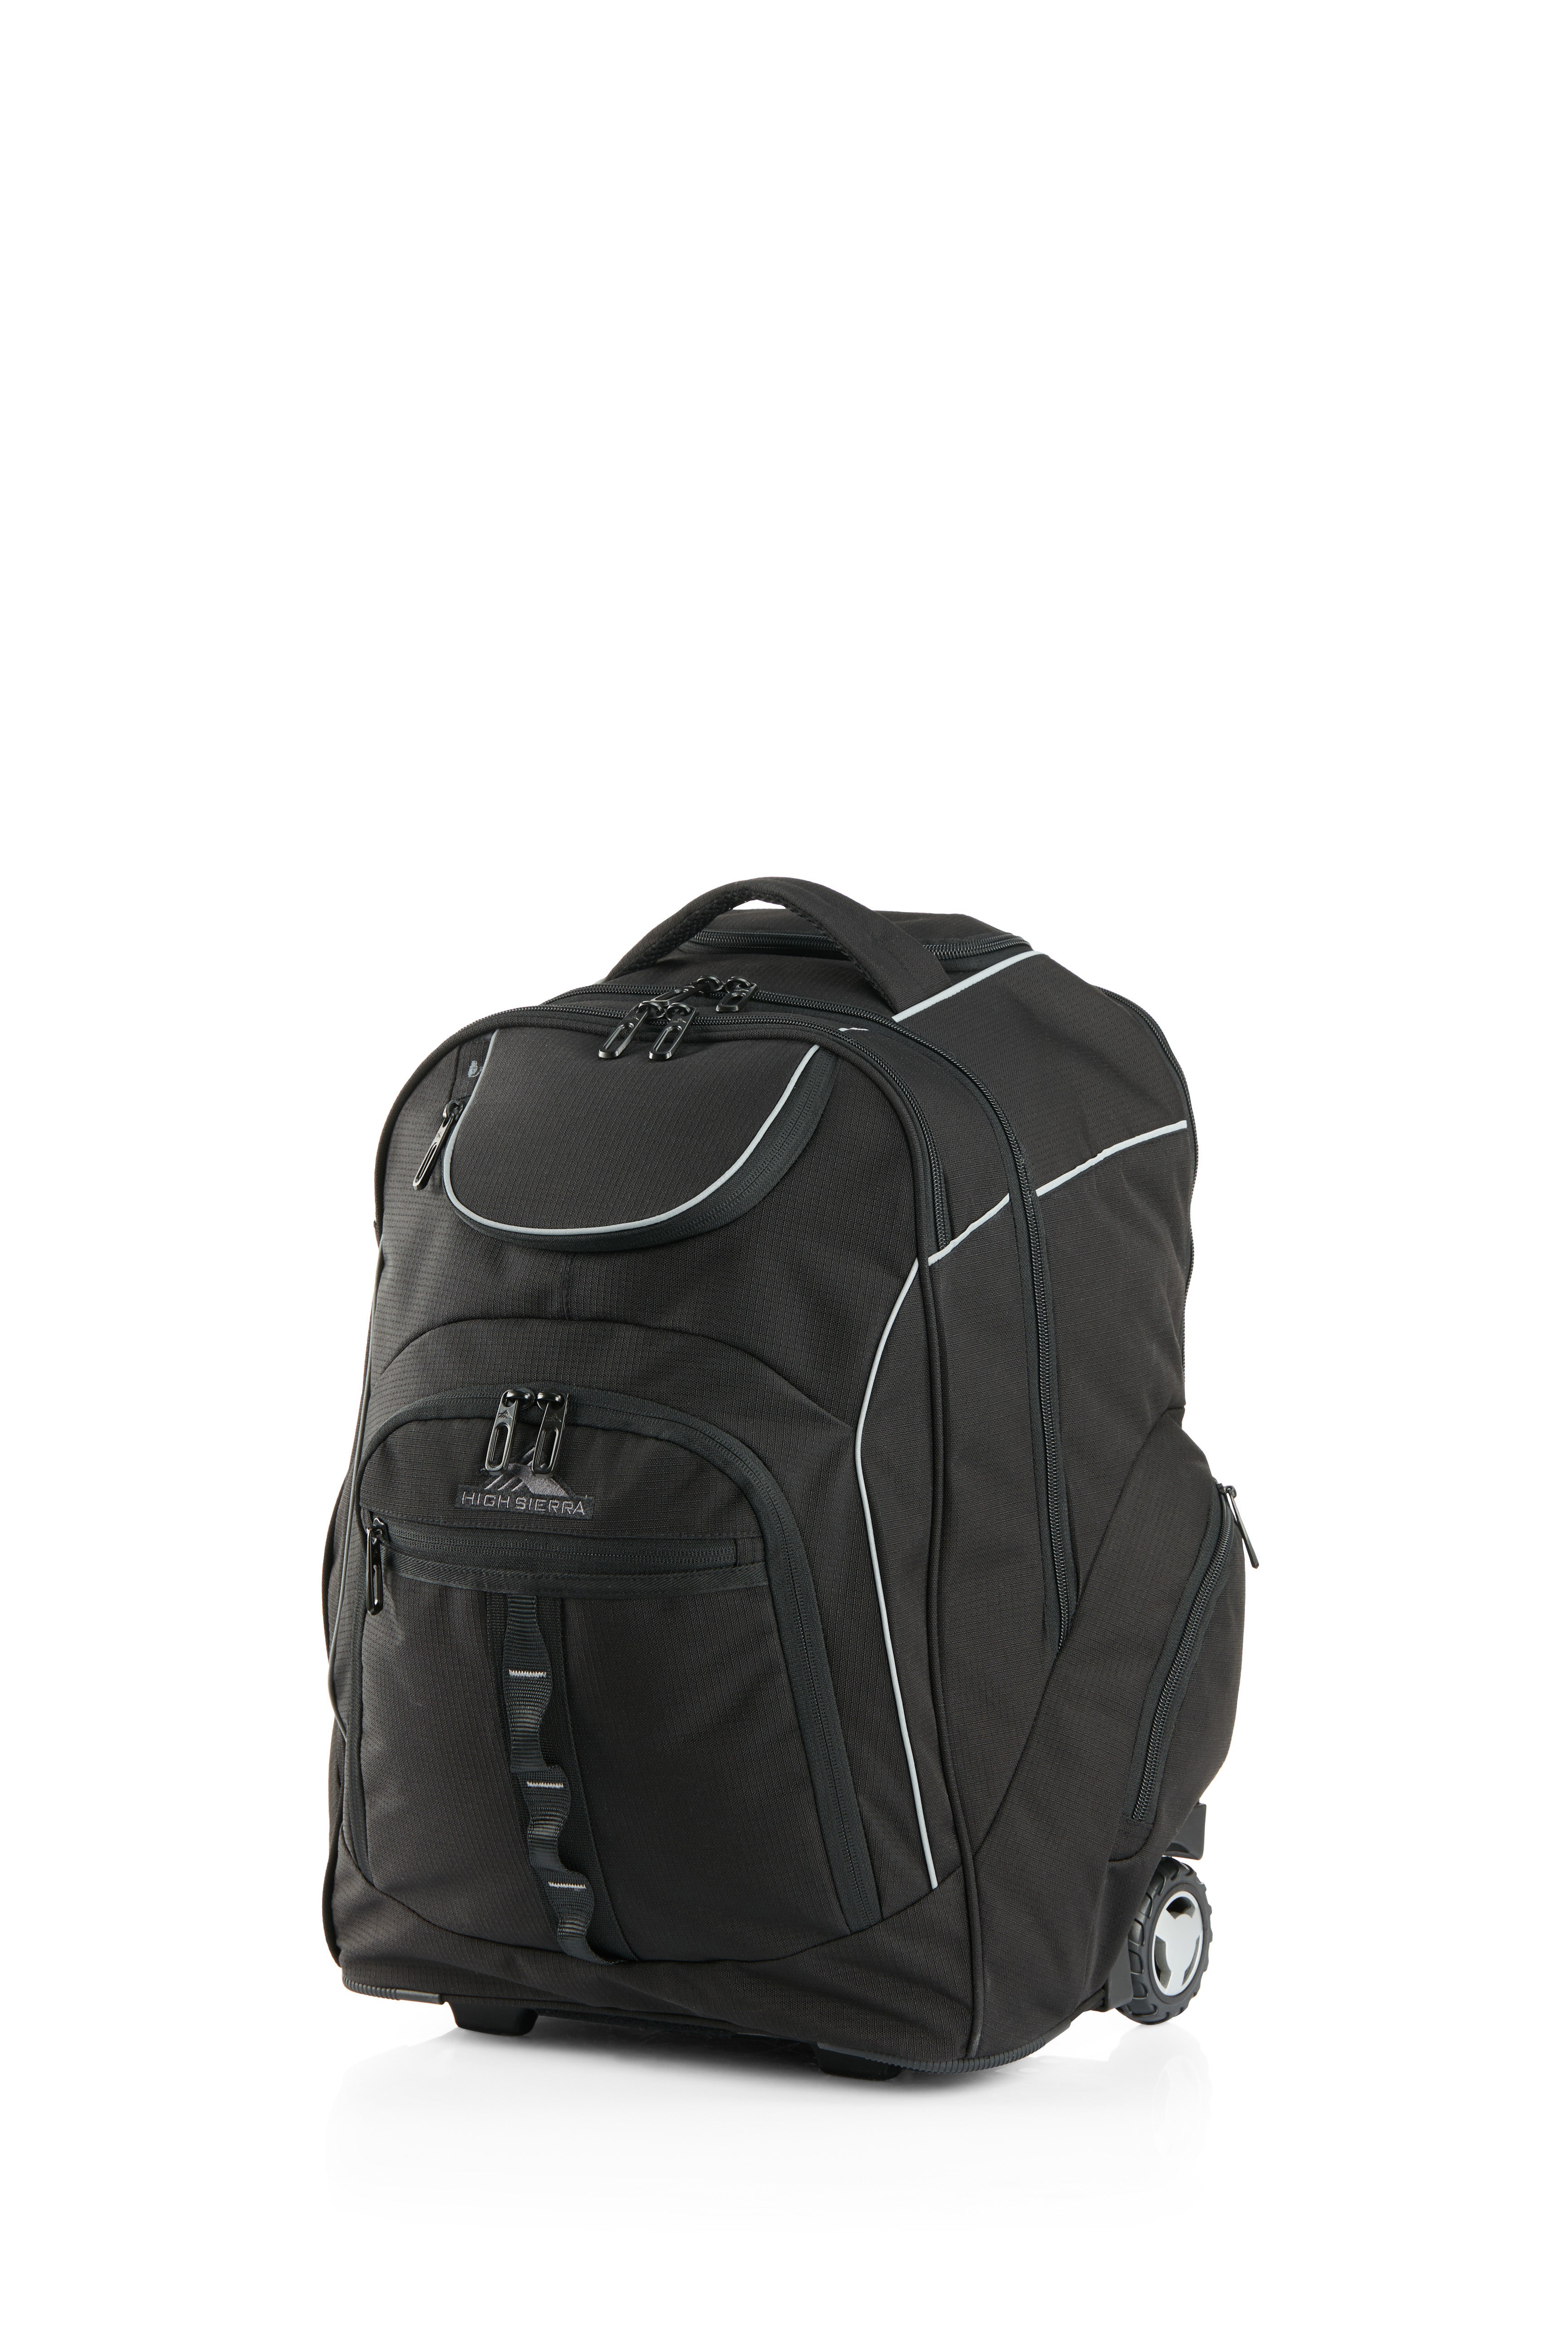 High Sierra - Access 3.0 Eco Pro Wheeled backpack - Black-3